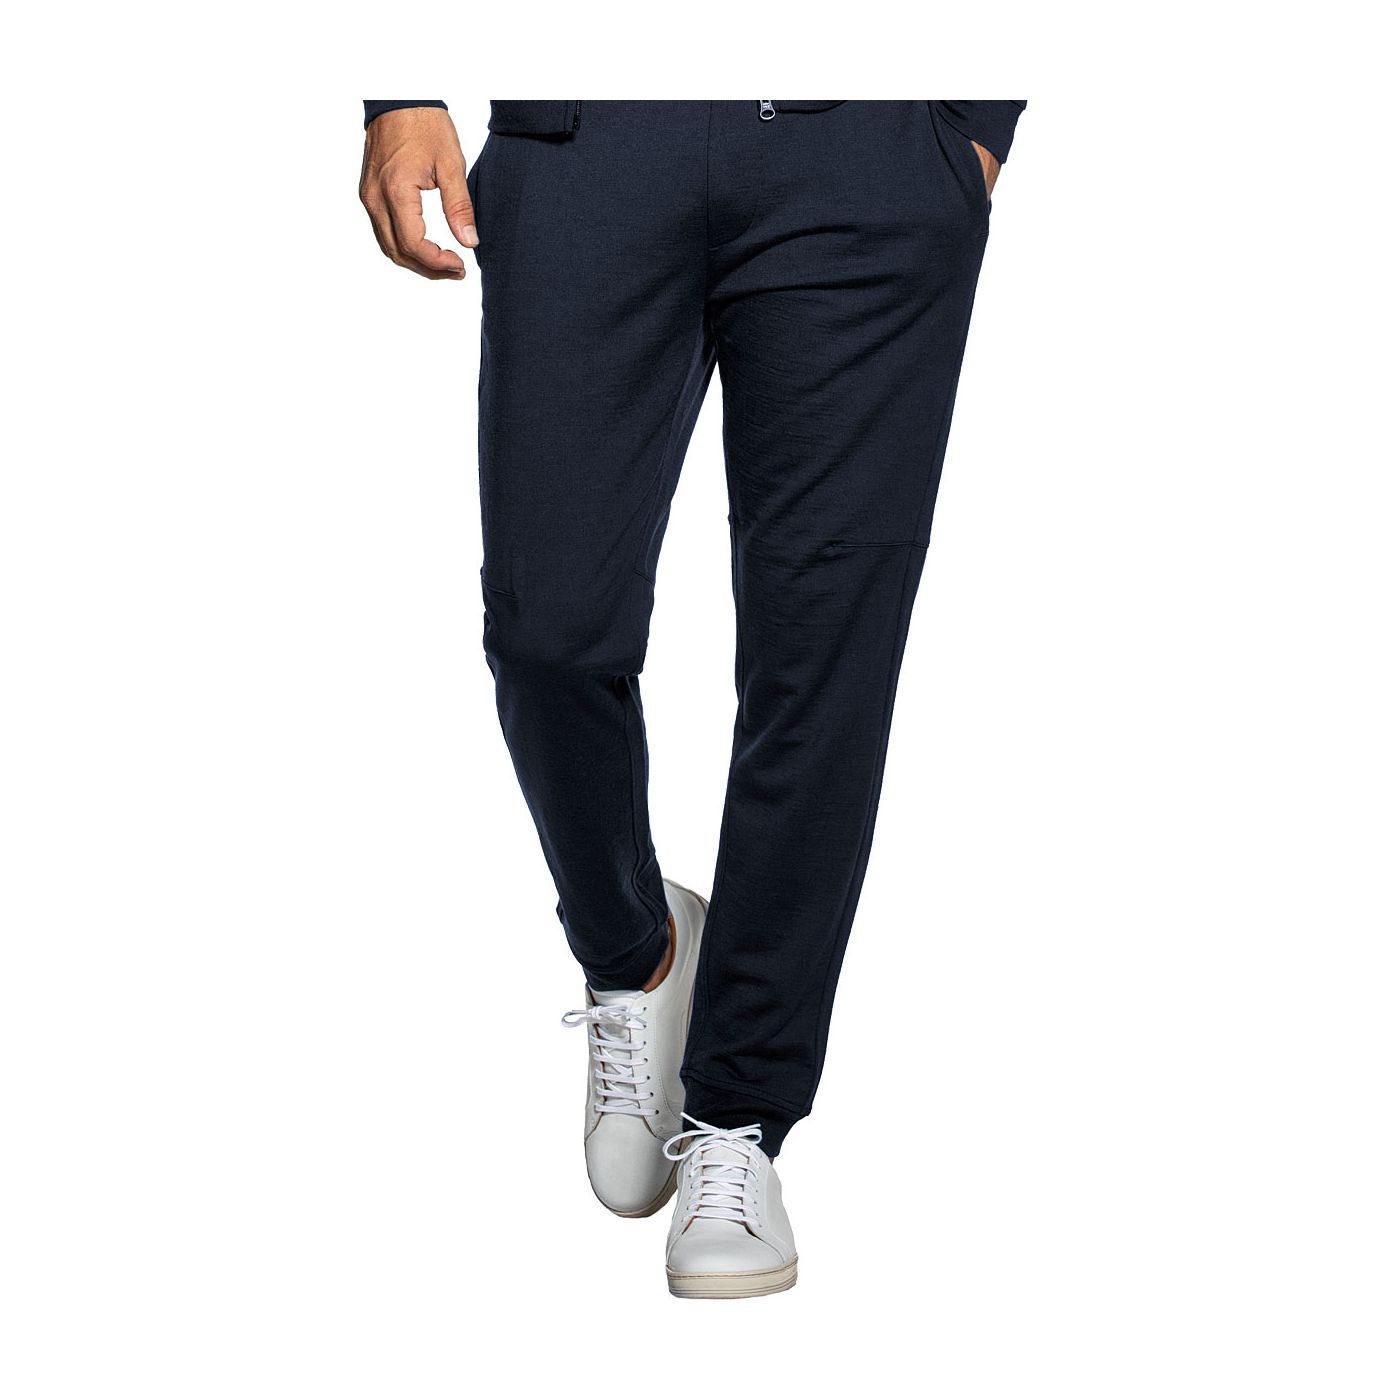 Sweatpants for men made of Merino wool in Dark blue